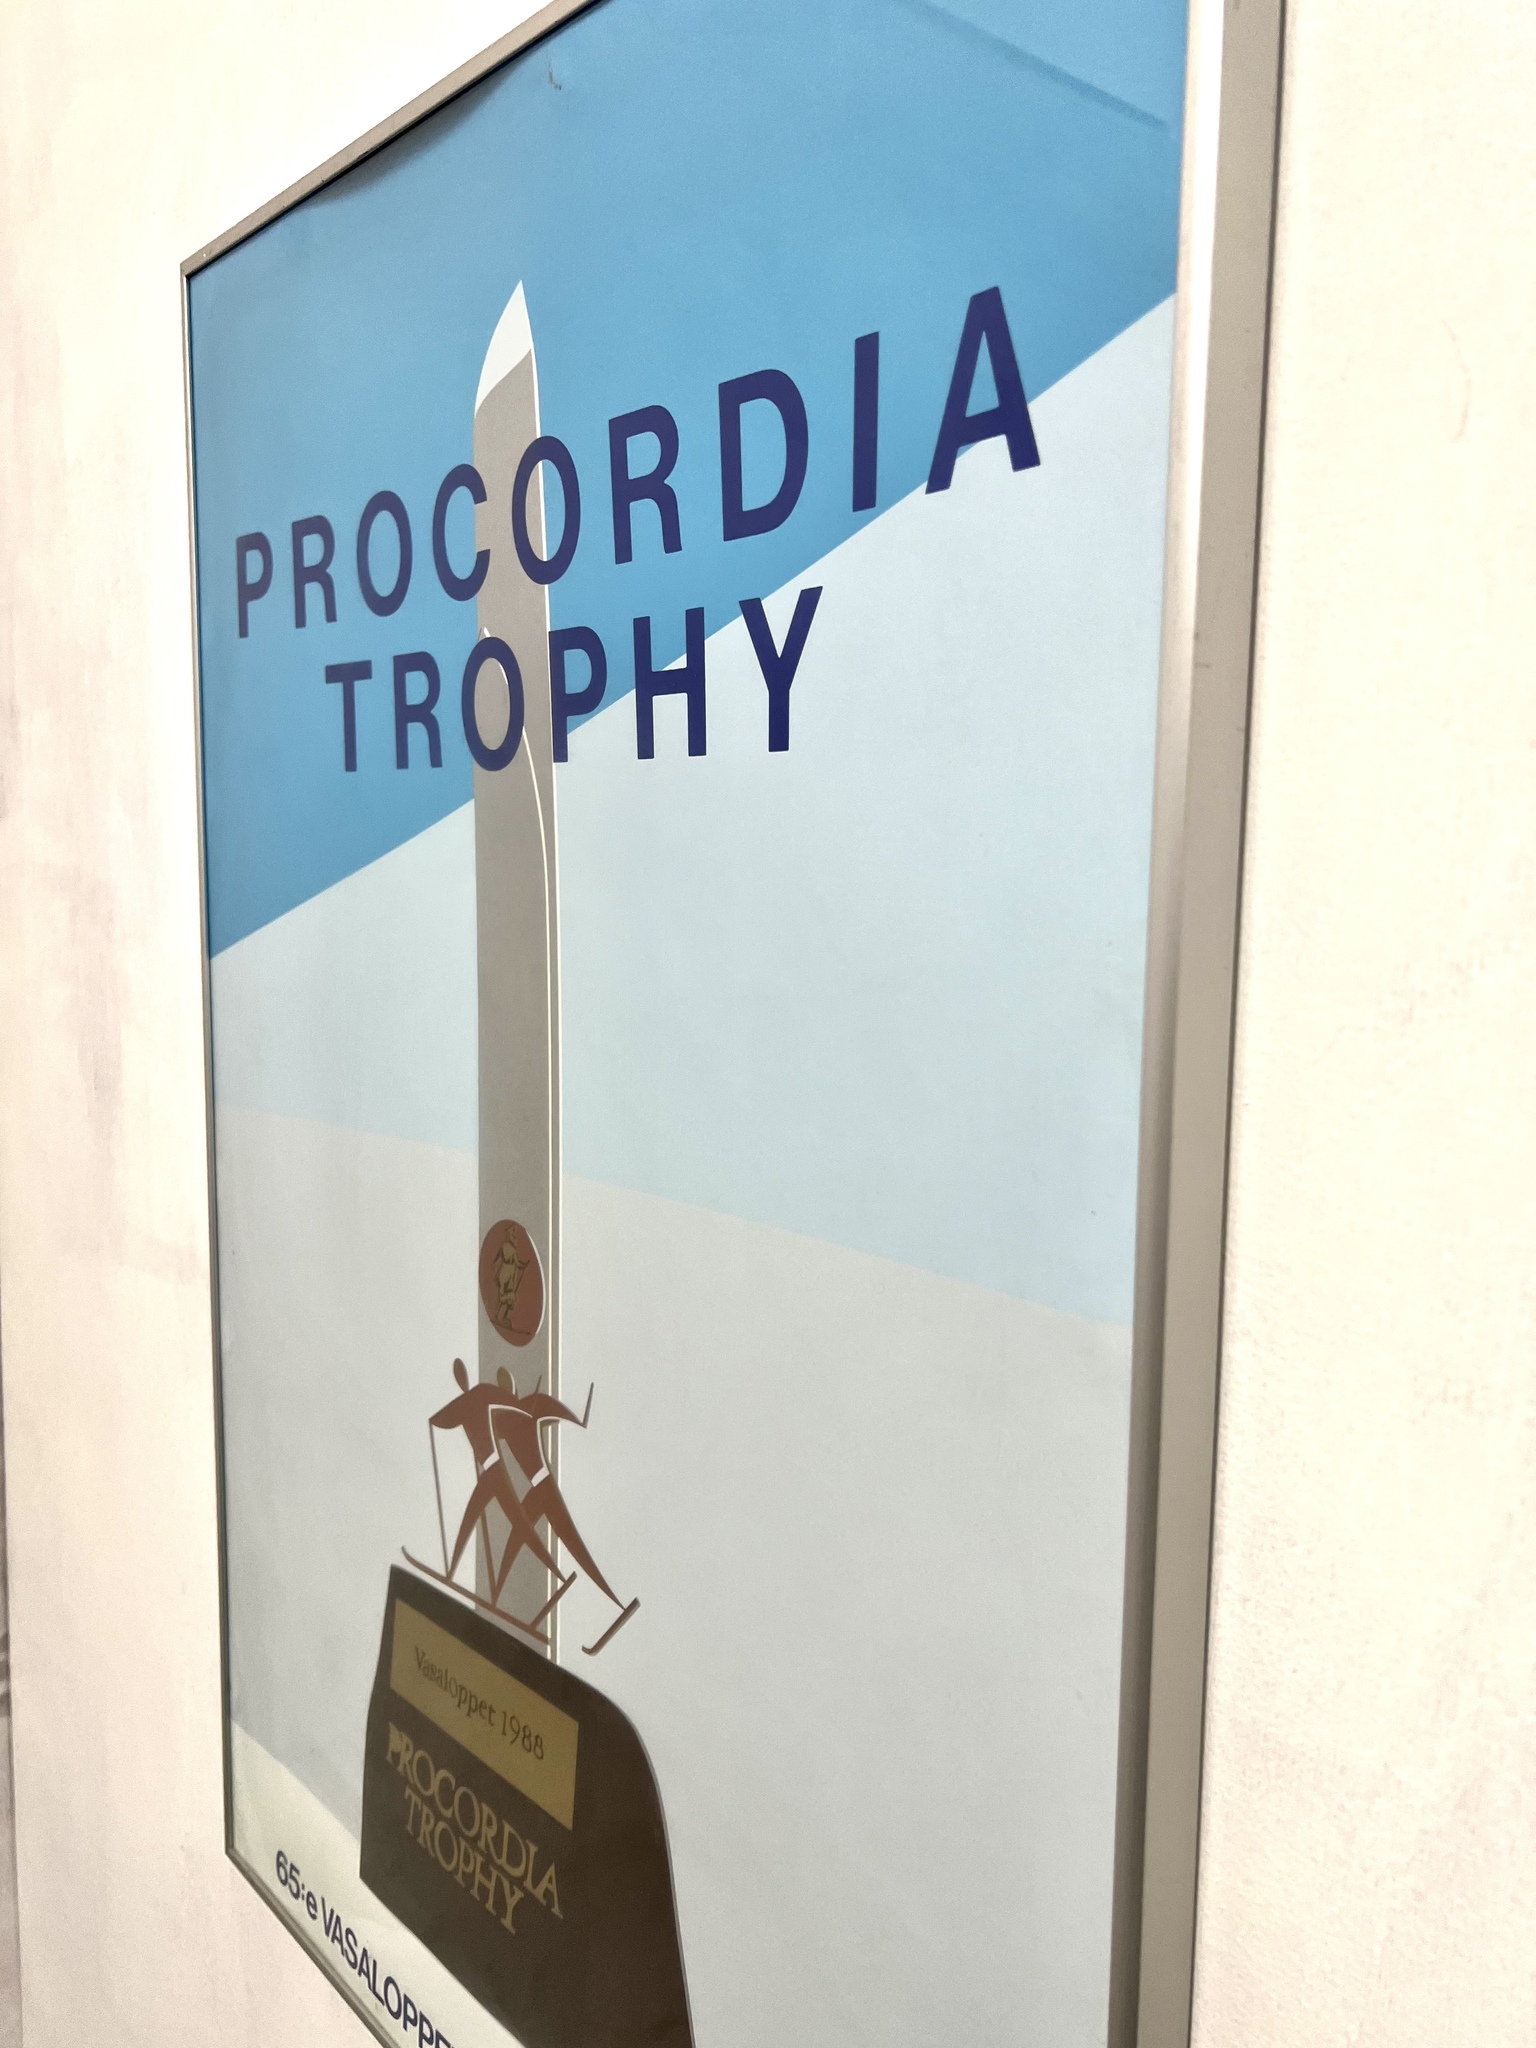 Franco Costa Vasalopp 1988 "Procordia Trophy" - Samlarobjekt, Signerad & Inramad! 50x70 cm